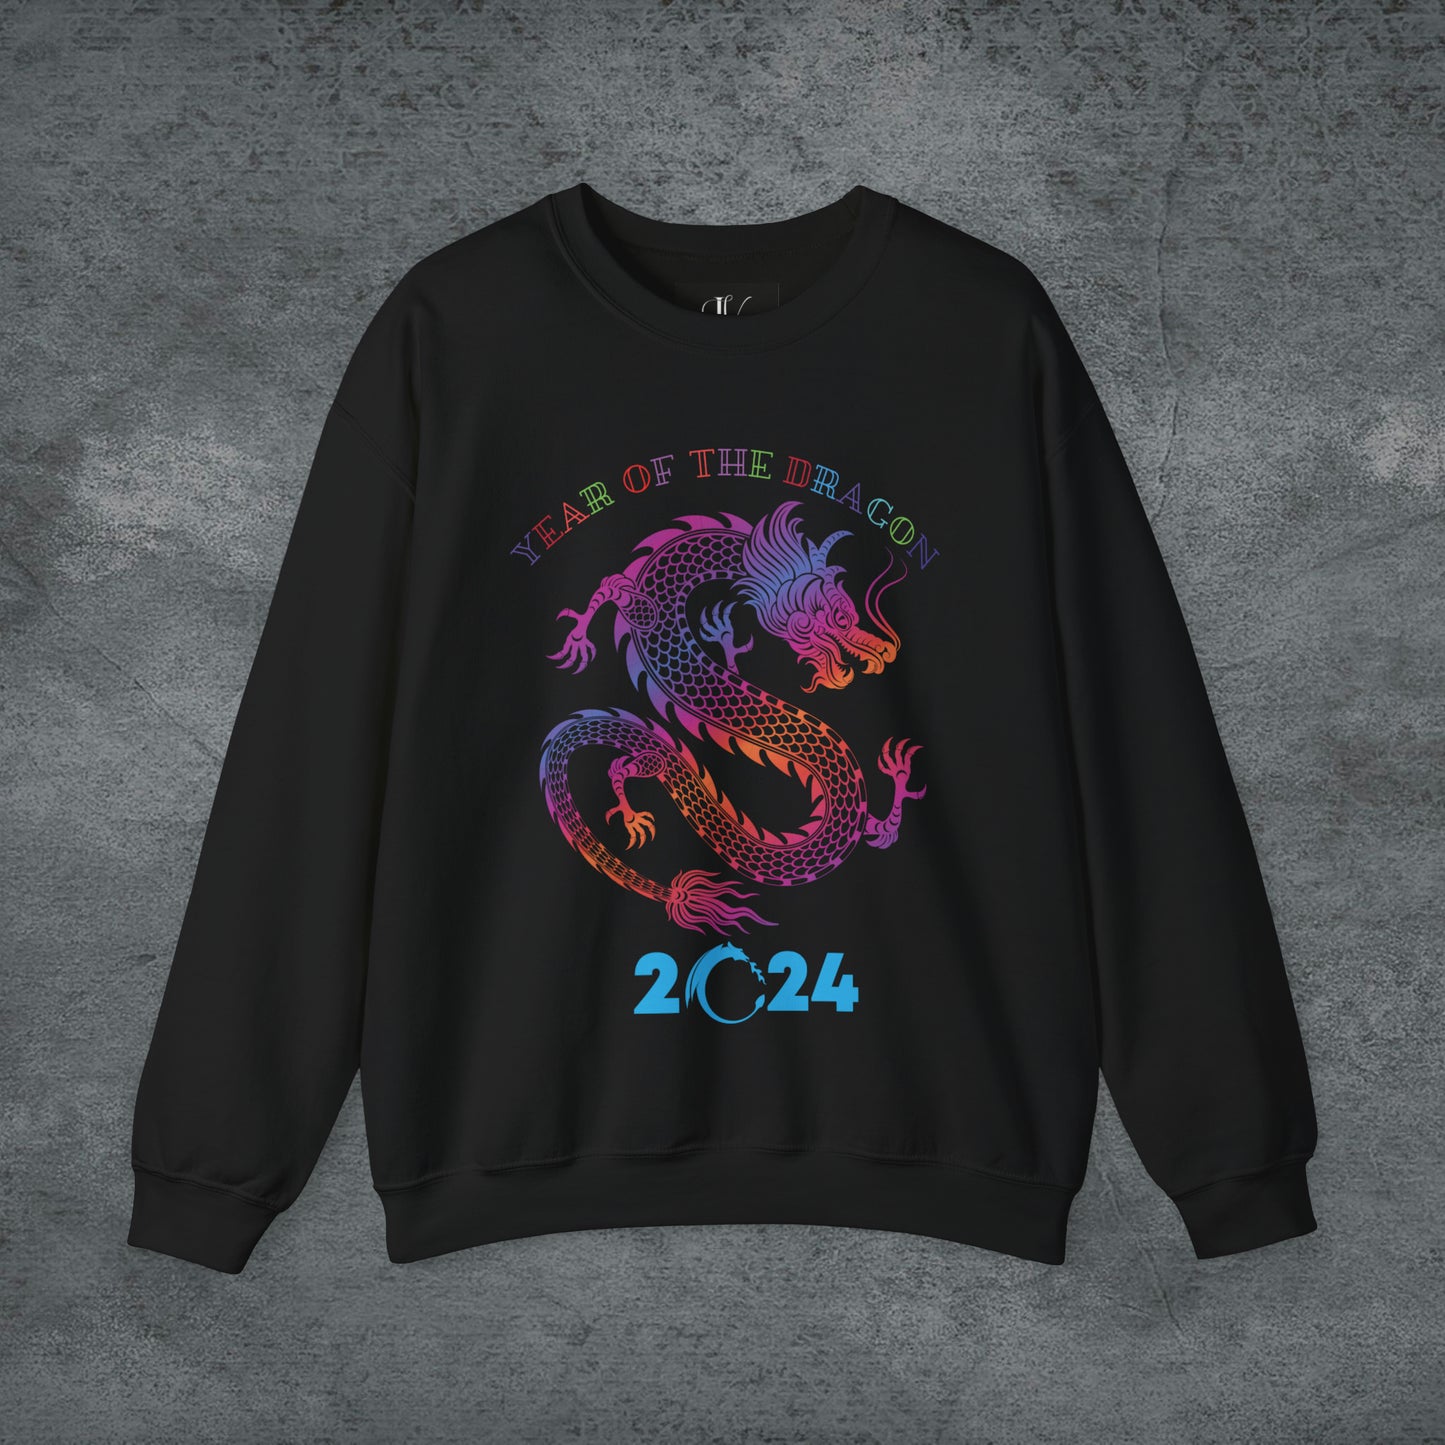 Year of the Dragon Sweatshirt - 2024 Chinese Zodiac Shirt for Lunar New Year Celebrations Sweatshirt S Black 